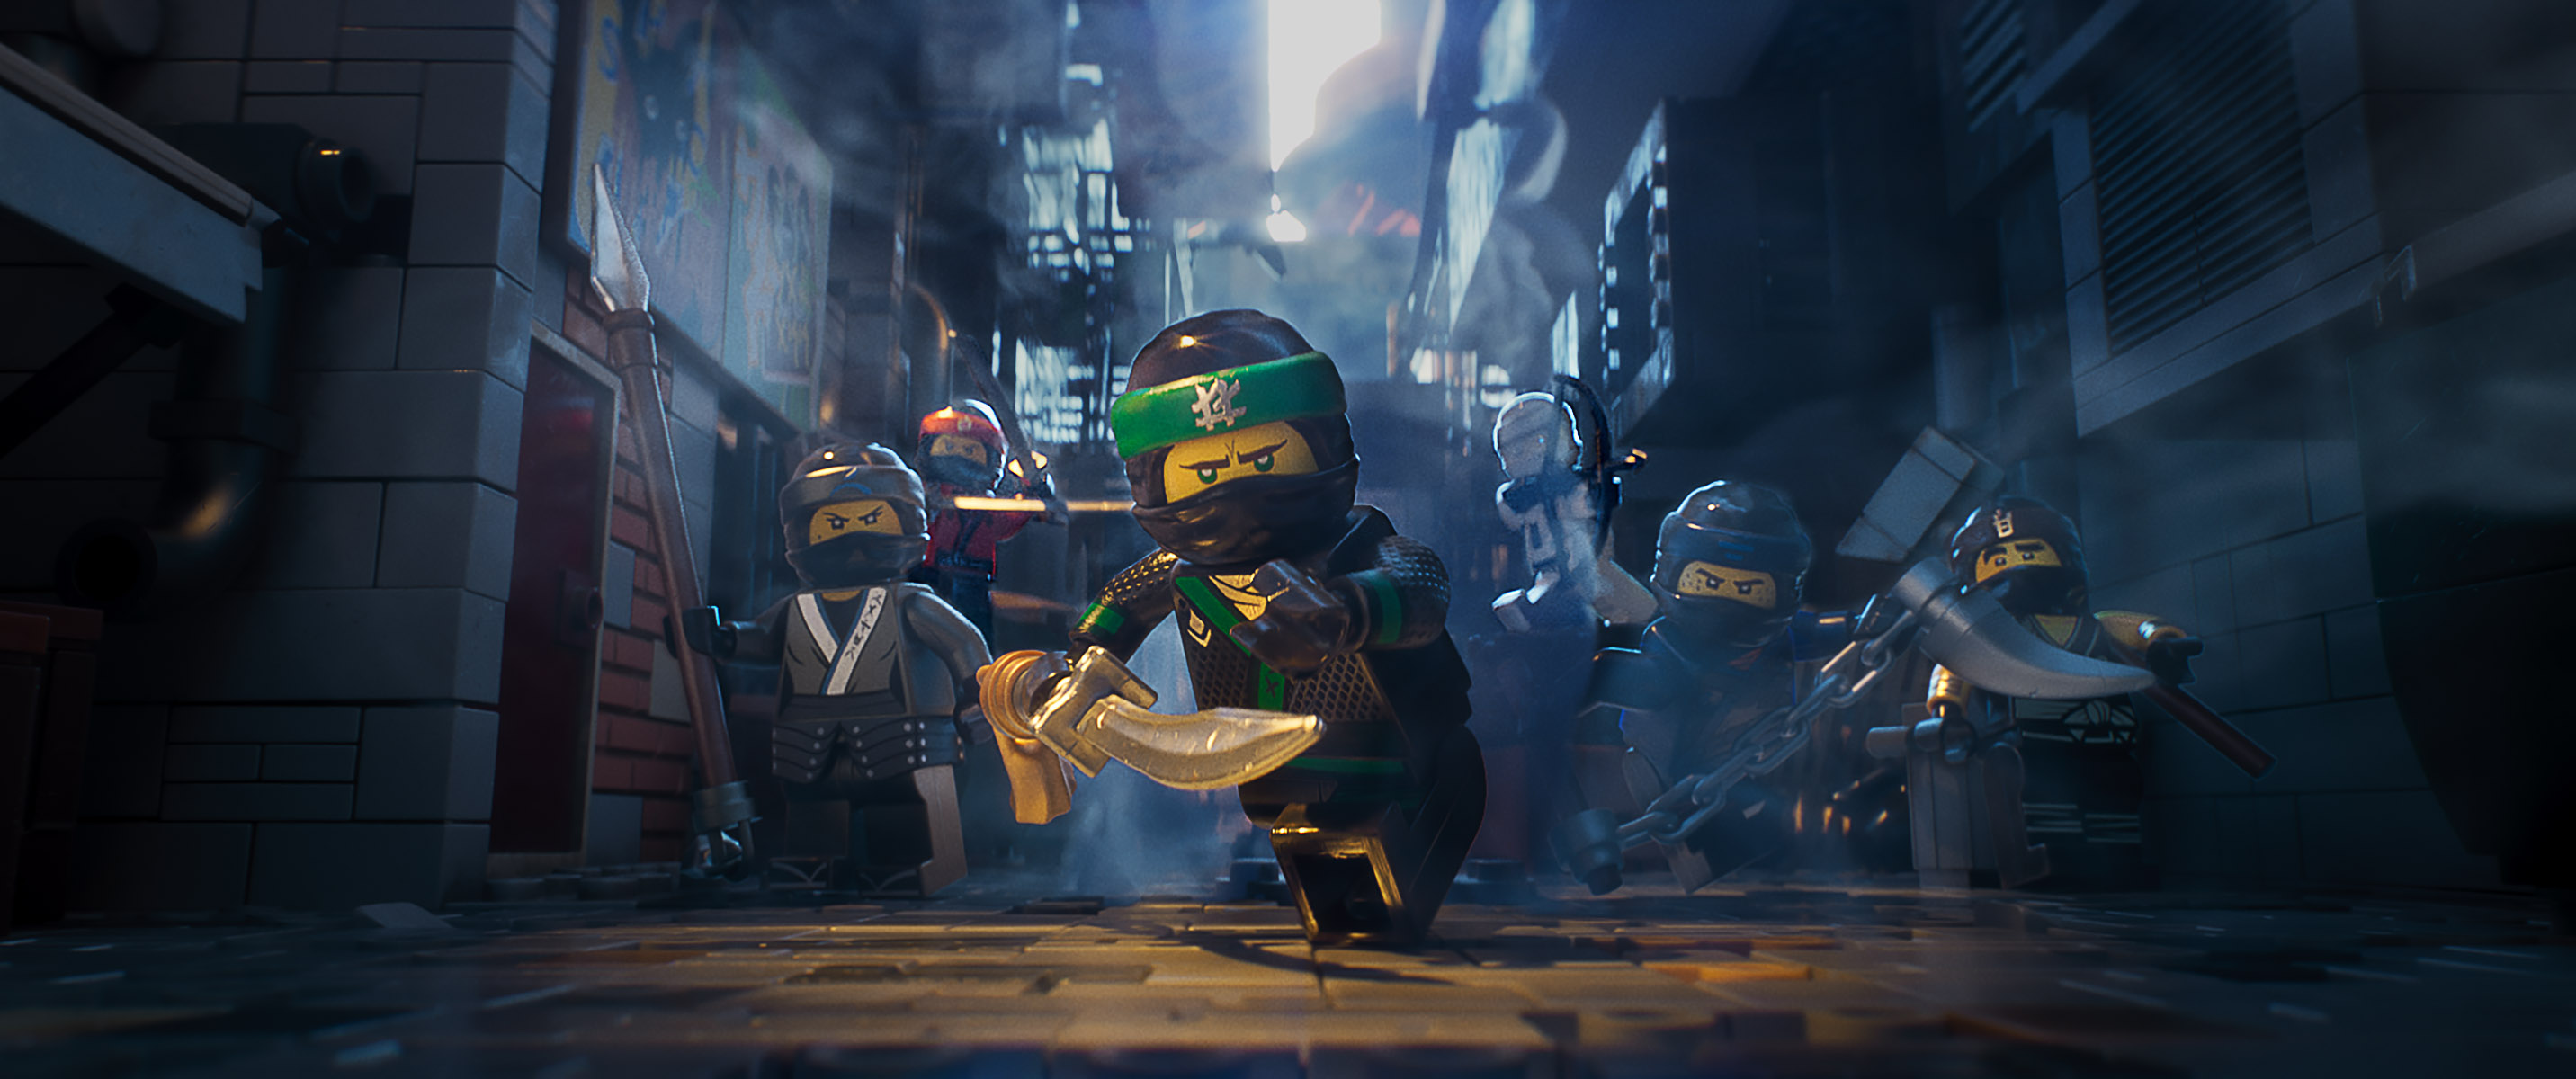 Lego Ninjago Movie INSM